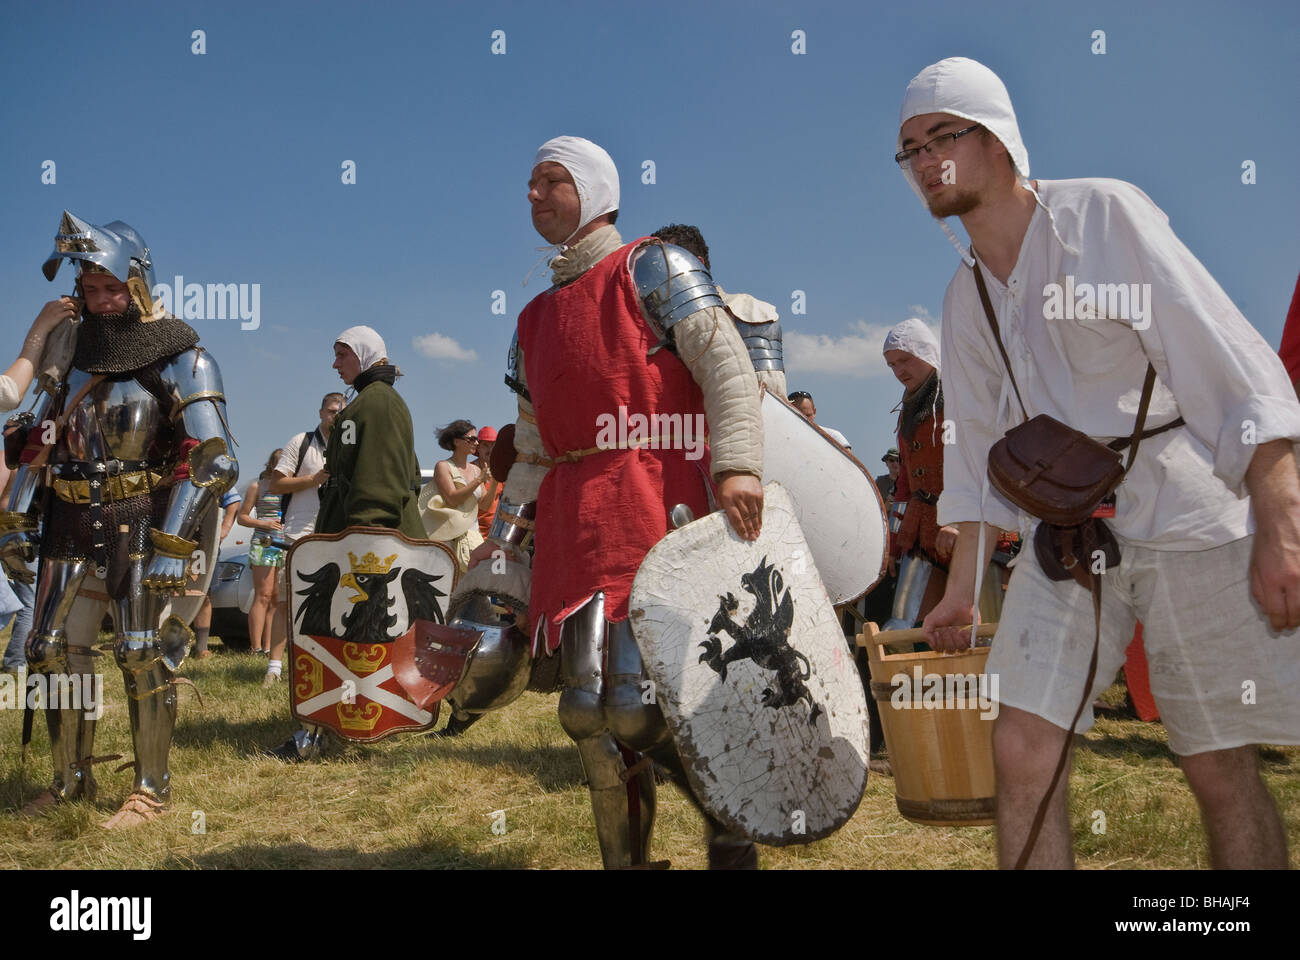 Reenactors preparing to recreate Battle of Grunwald of 1410 in Warminsko-Mazurskie province, Poland Stock Photo